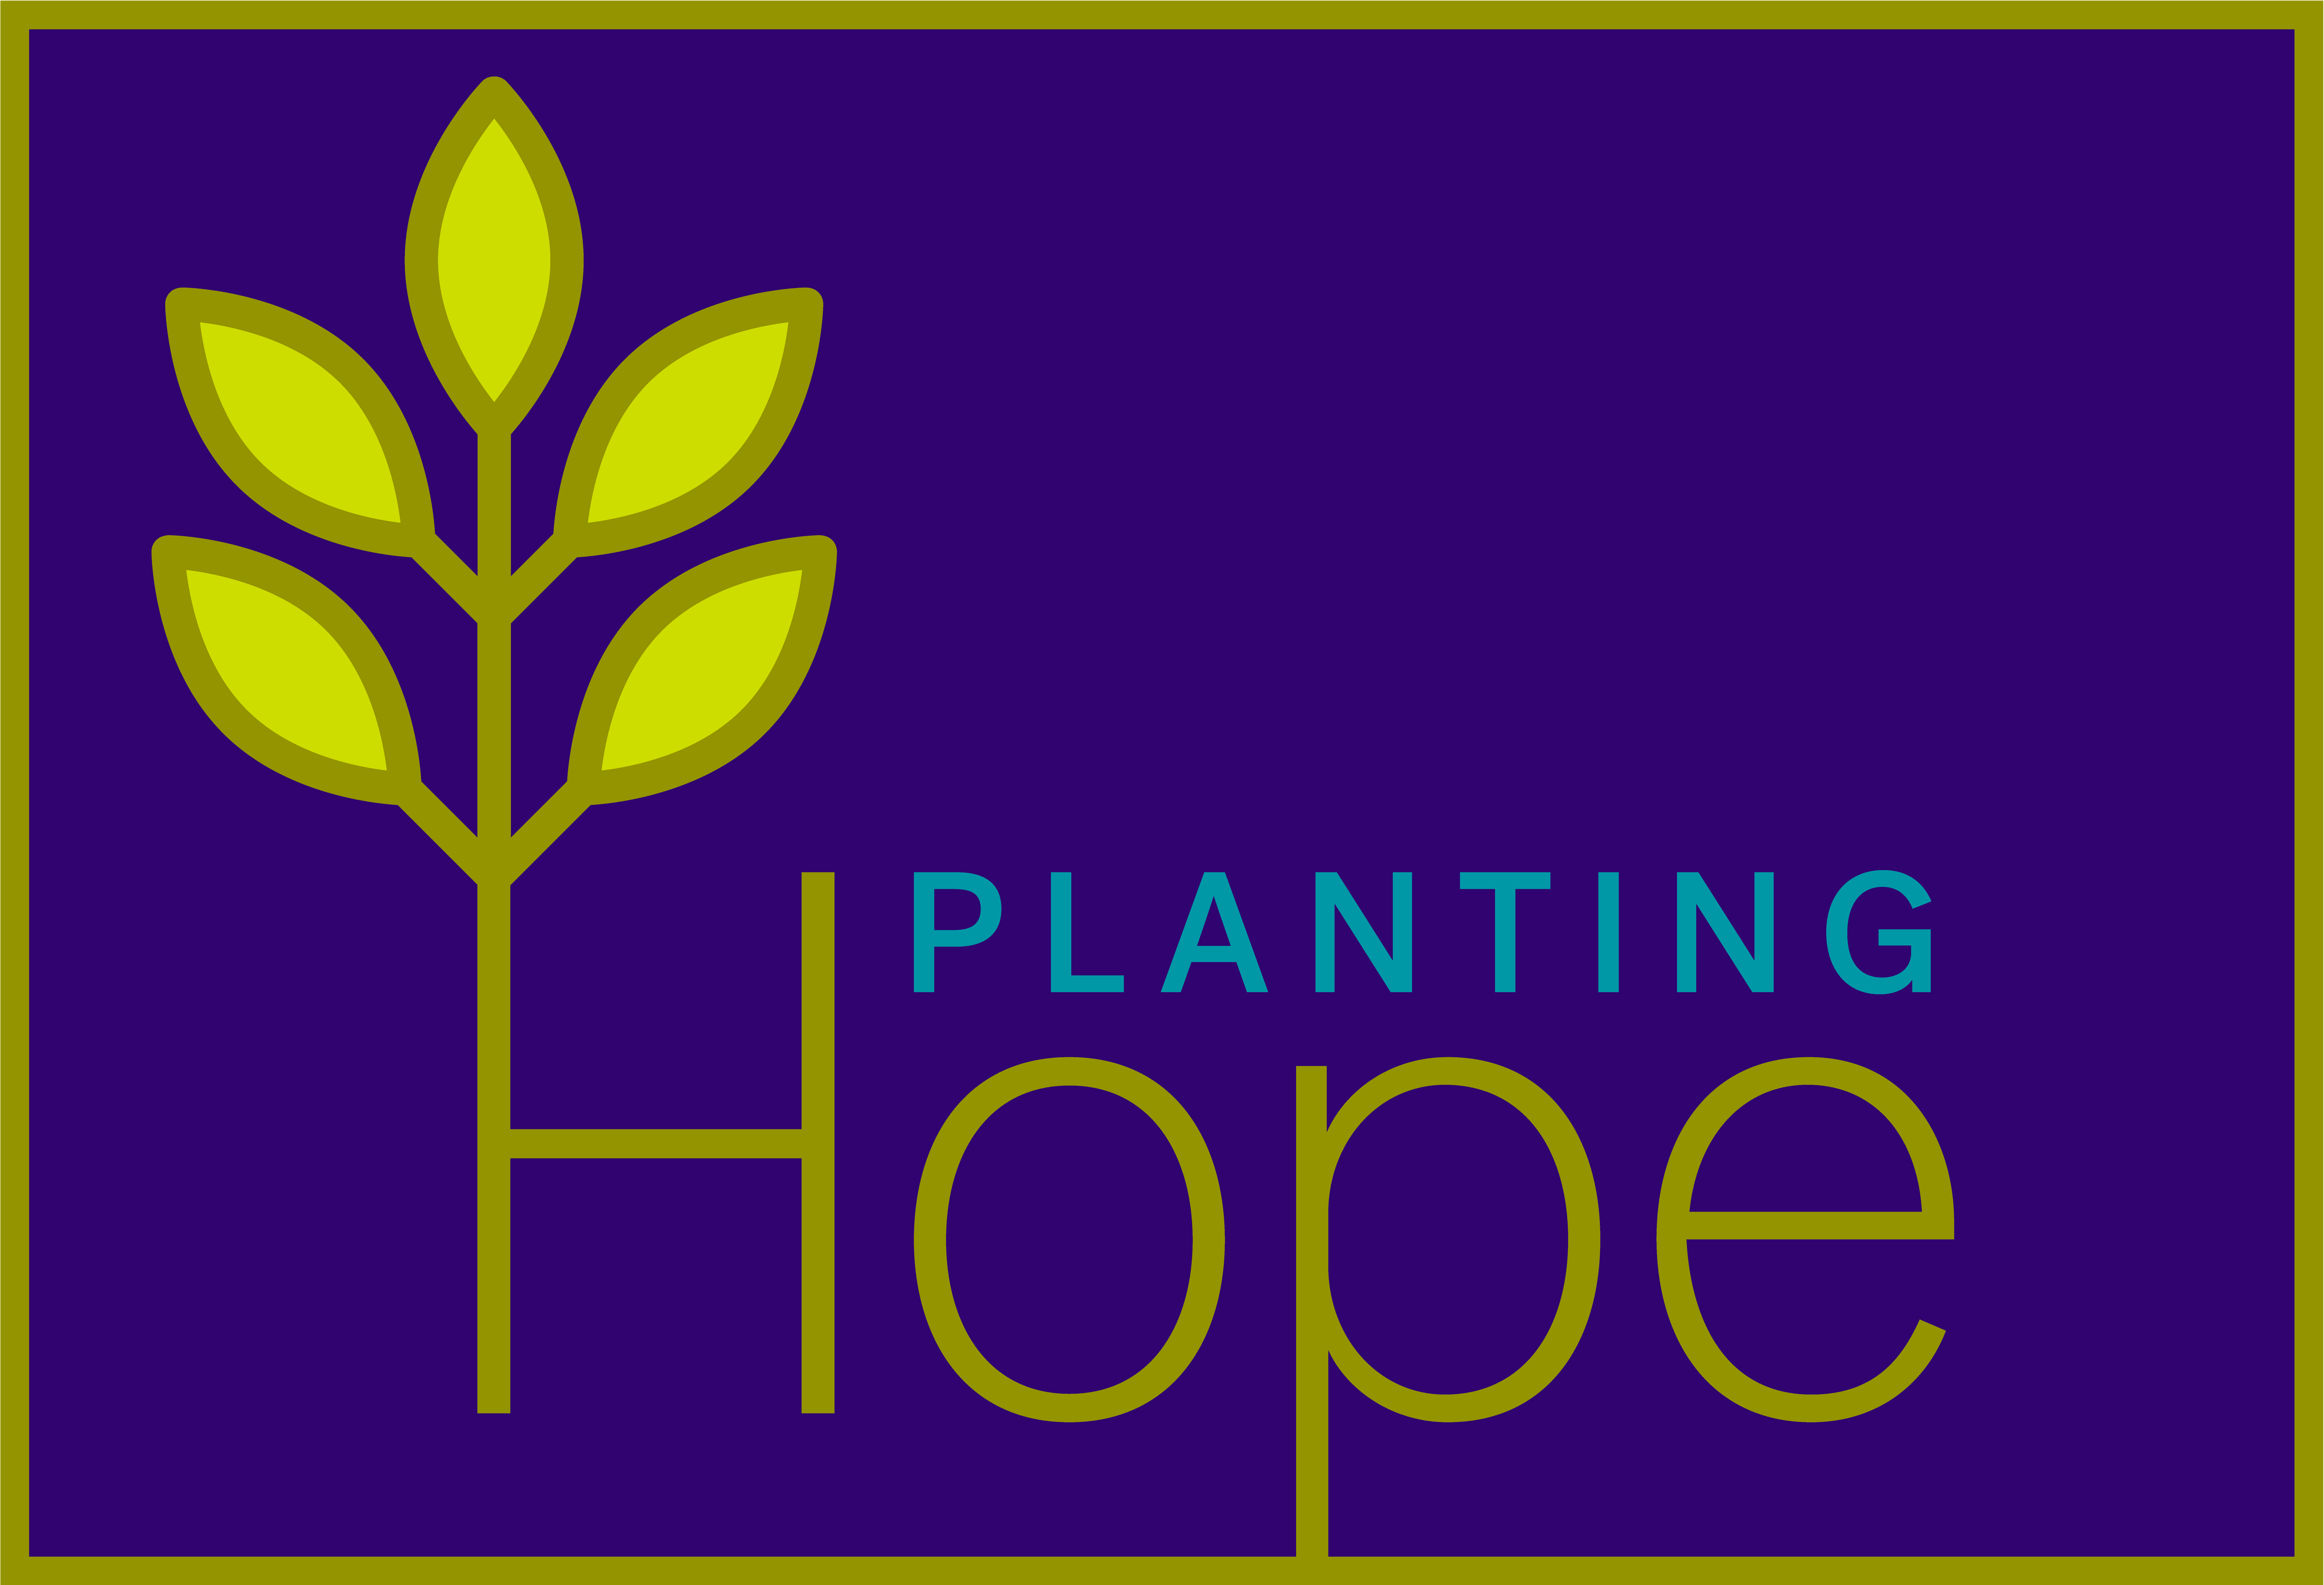 Planting Hop logo image